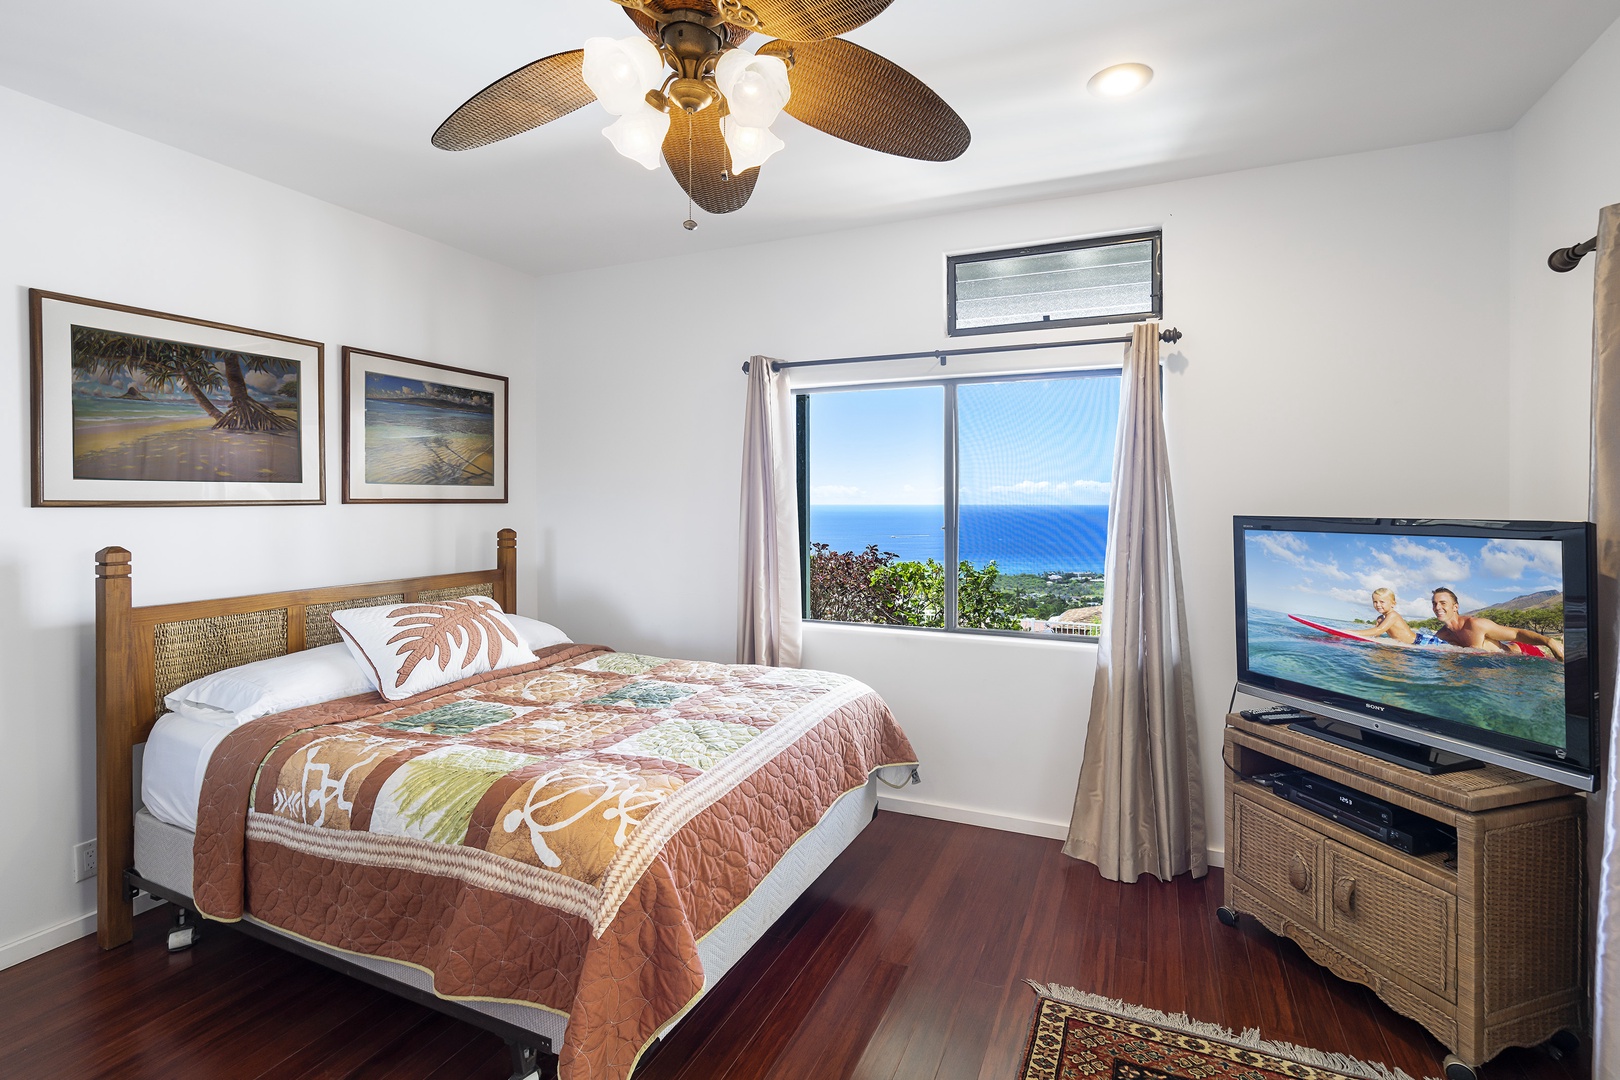 Kailua Kona Vacation Rentals, Ho'o Maluhia - Lanai access and Cable TV in guest bedroom!